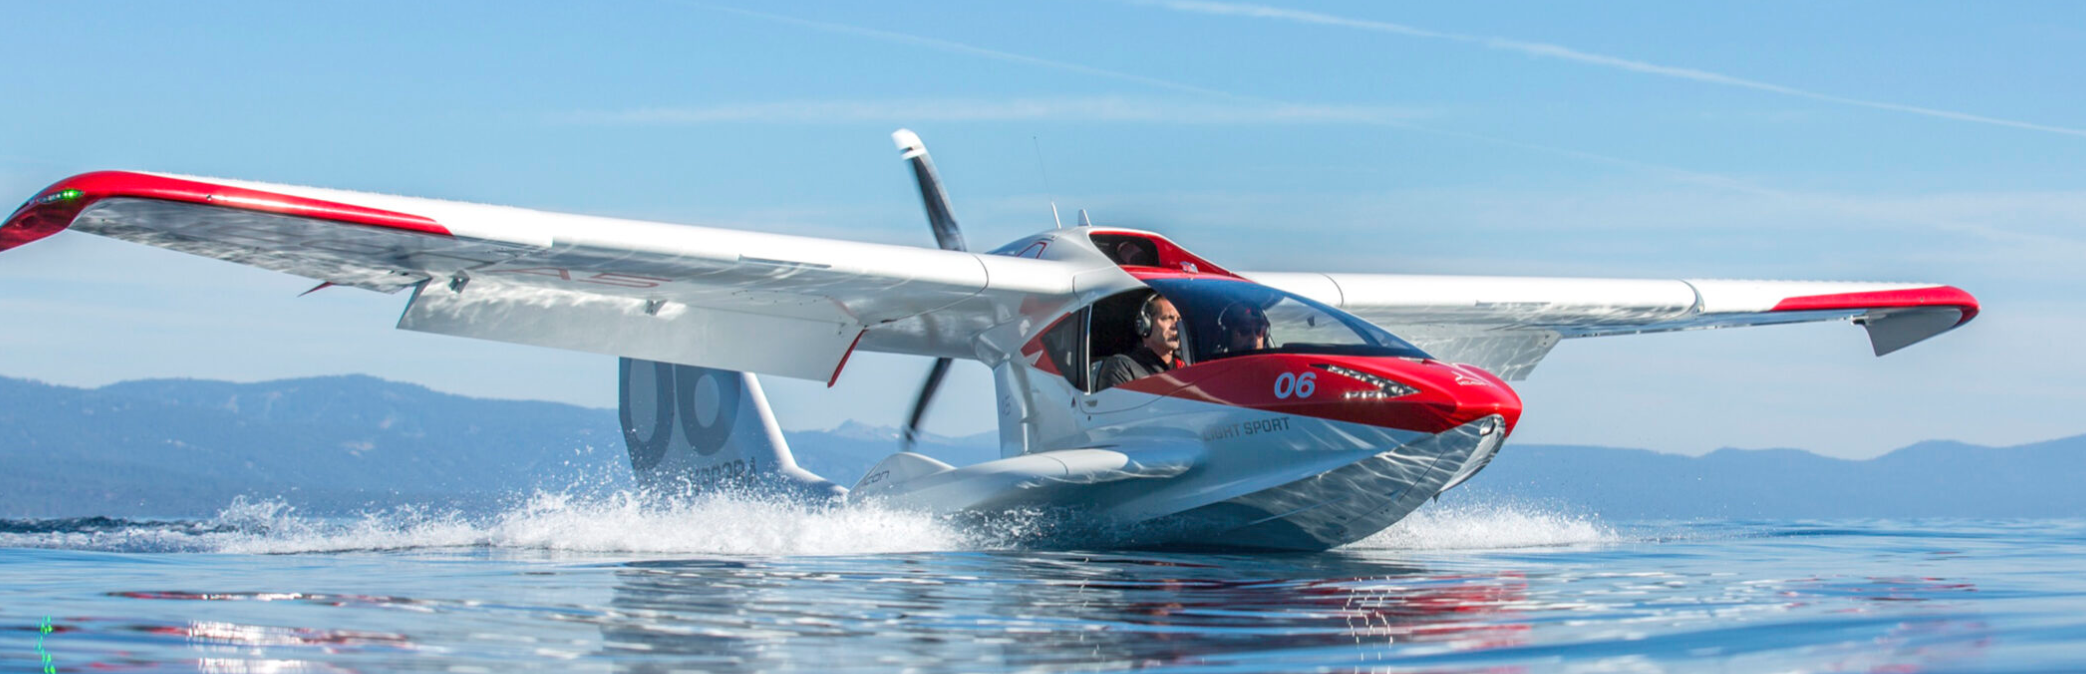 Icon A5, amphibious aircraft, flying plane, seaplane